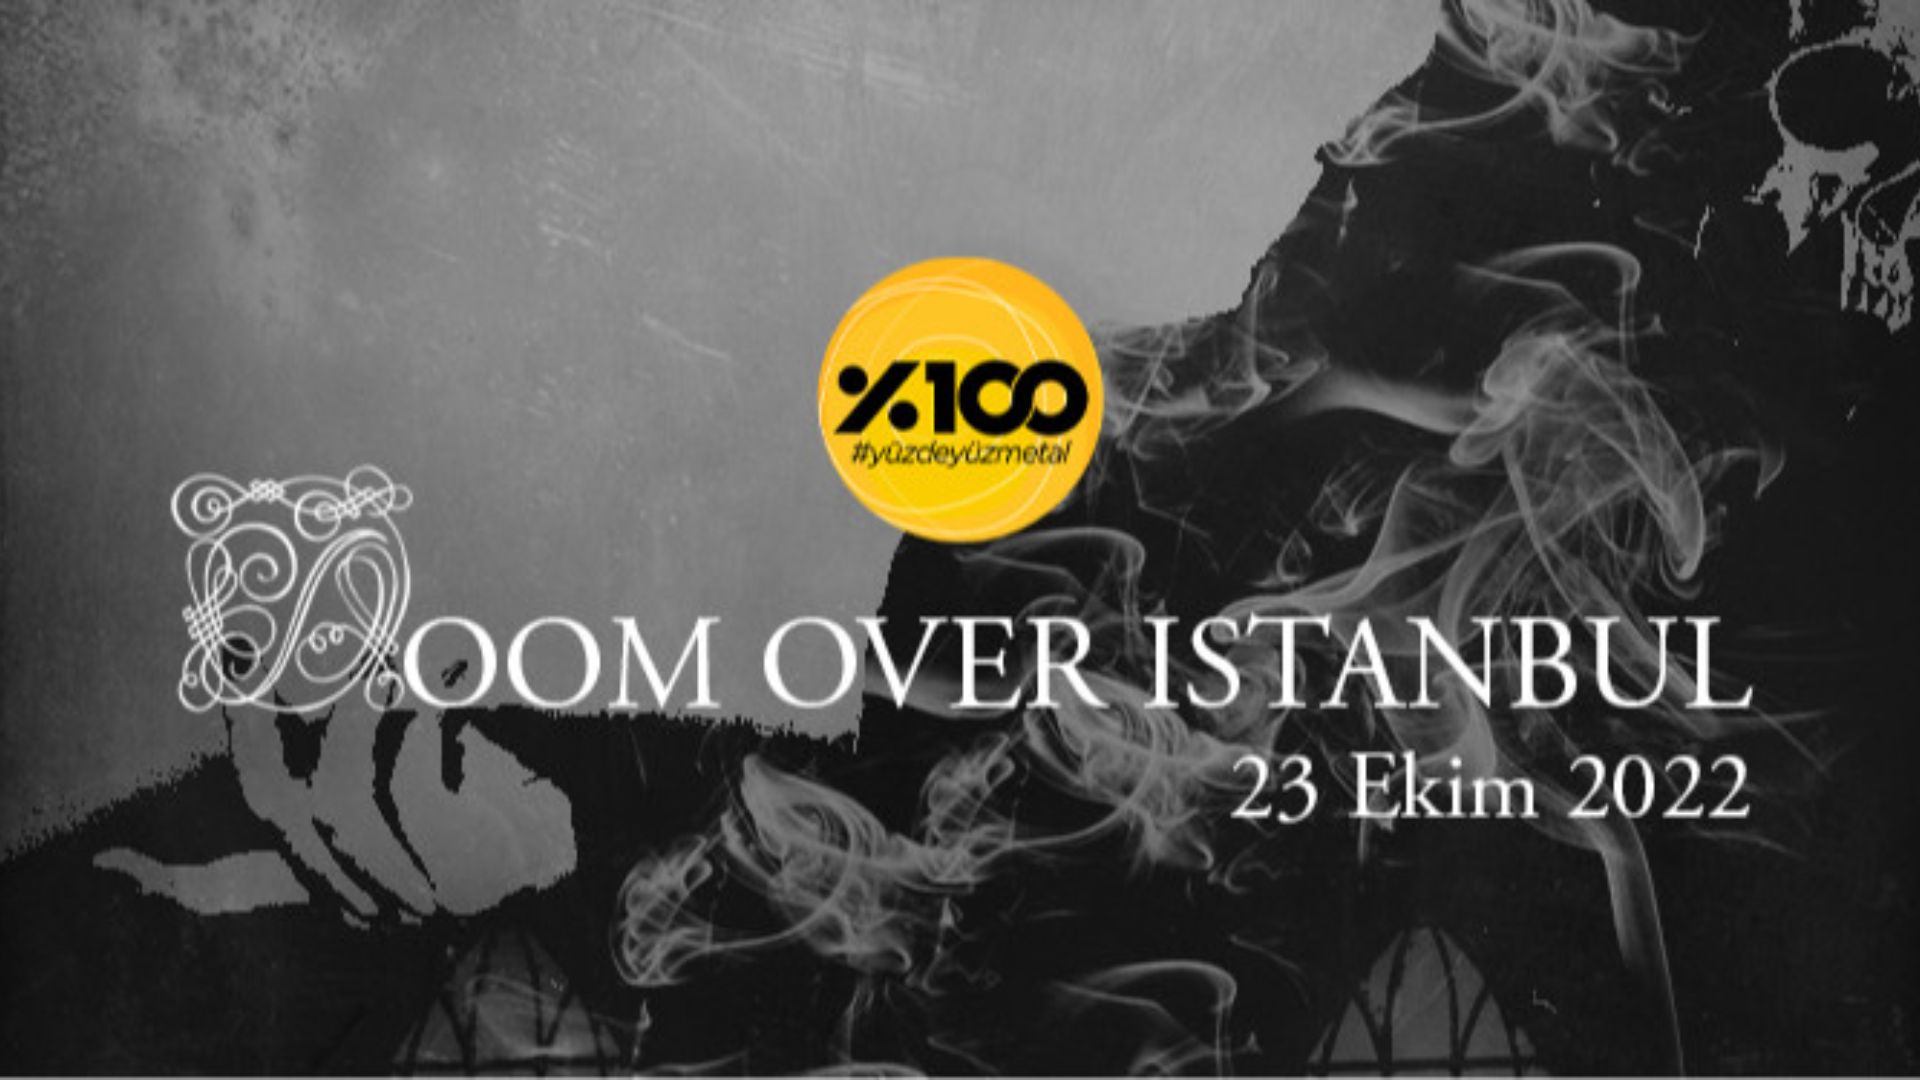 doom over istanbul 2022 festival